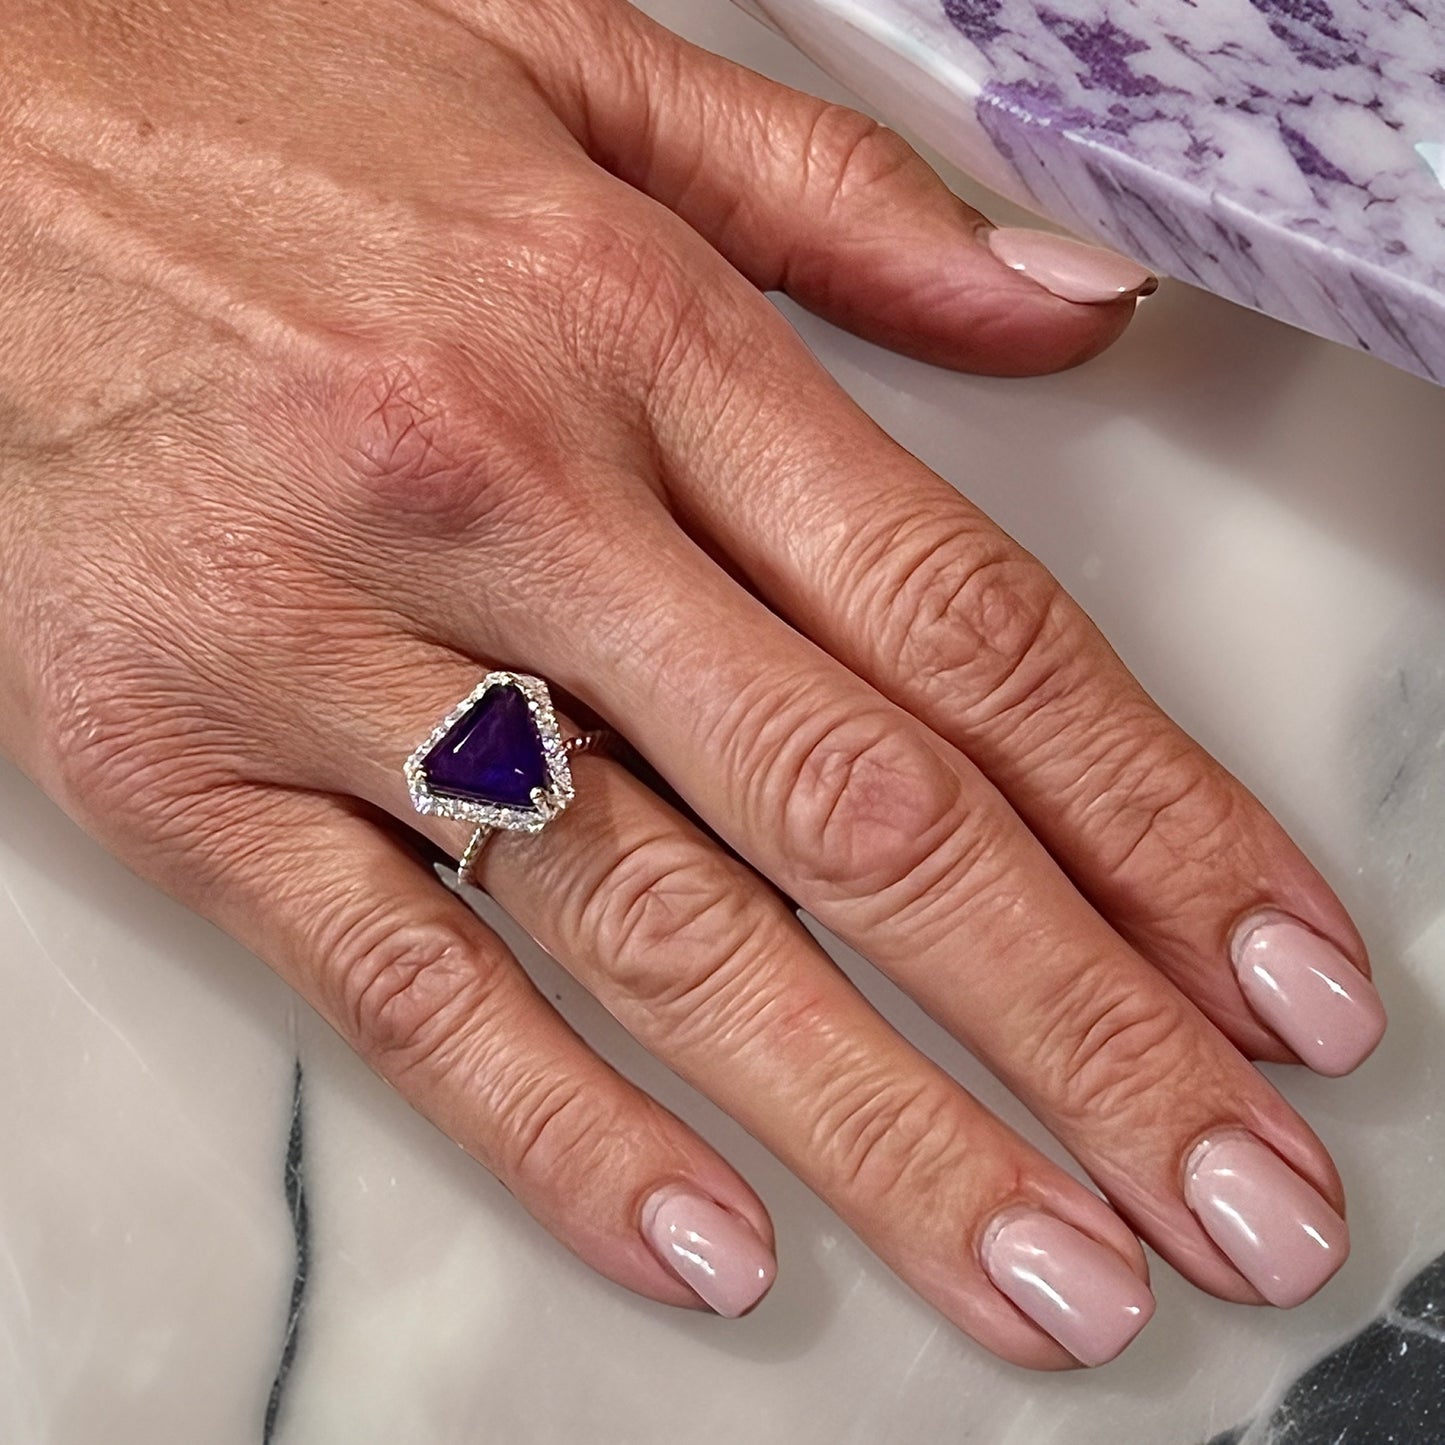 Natural Sapphire Diamond Ring 6.5 14k W Gold 5.84 TCW Certified $5,950 310654 - Certified Fine Jewelry